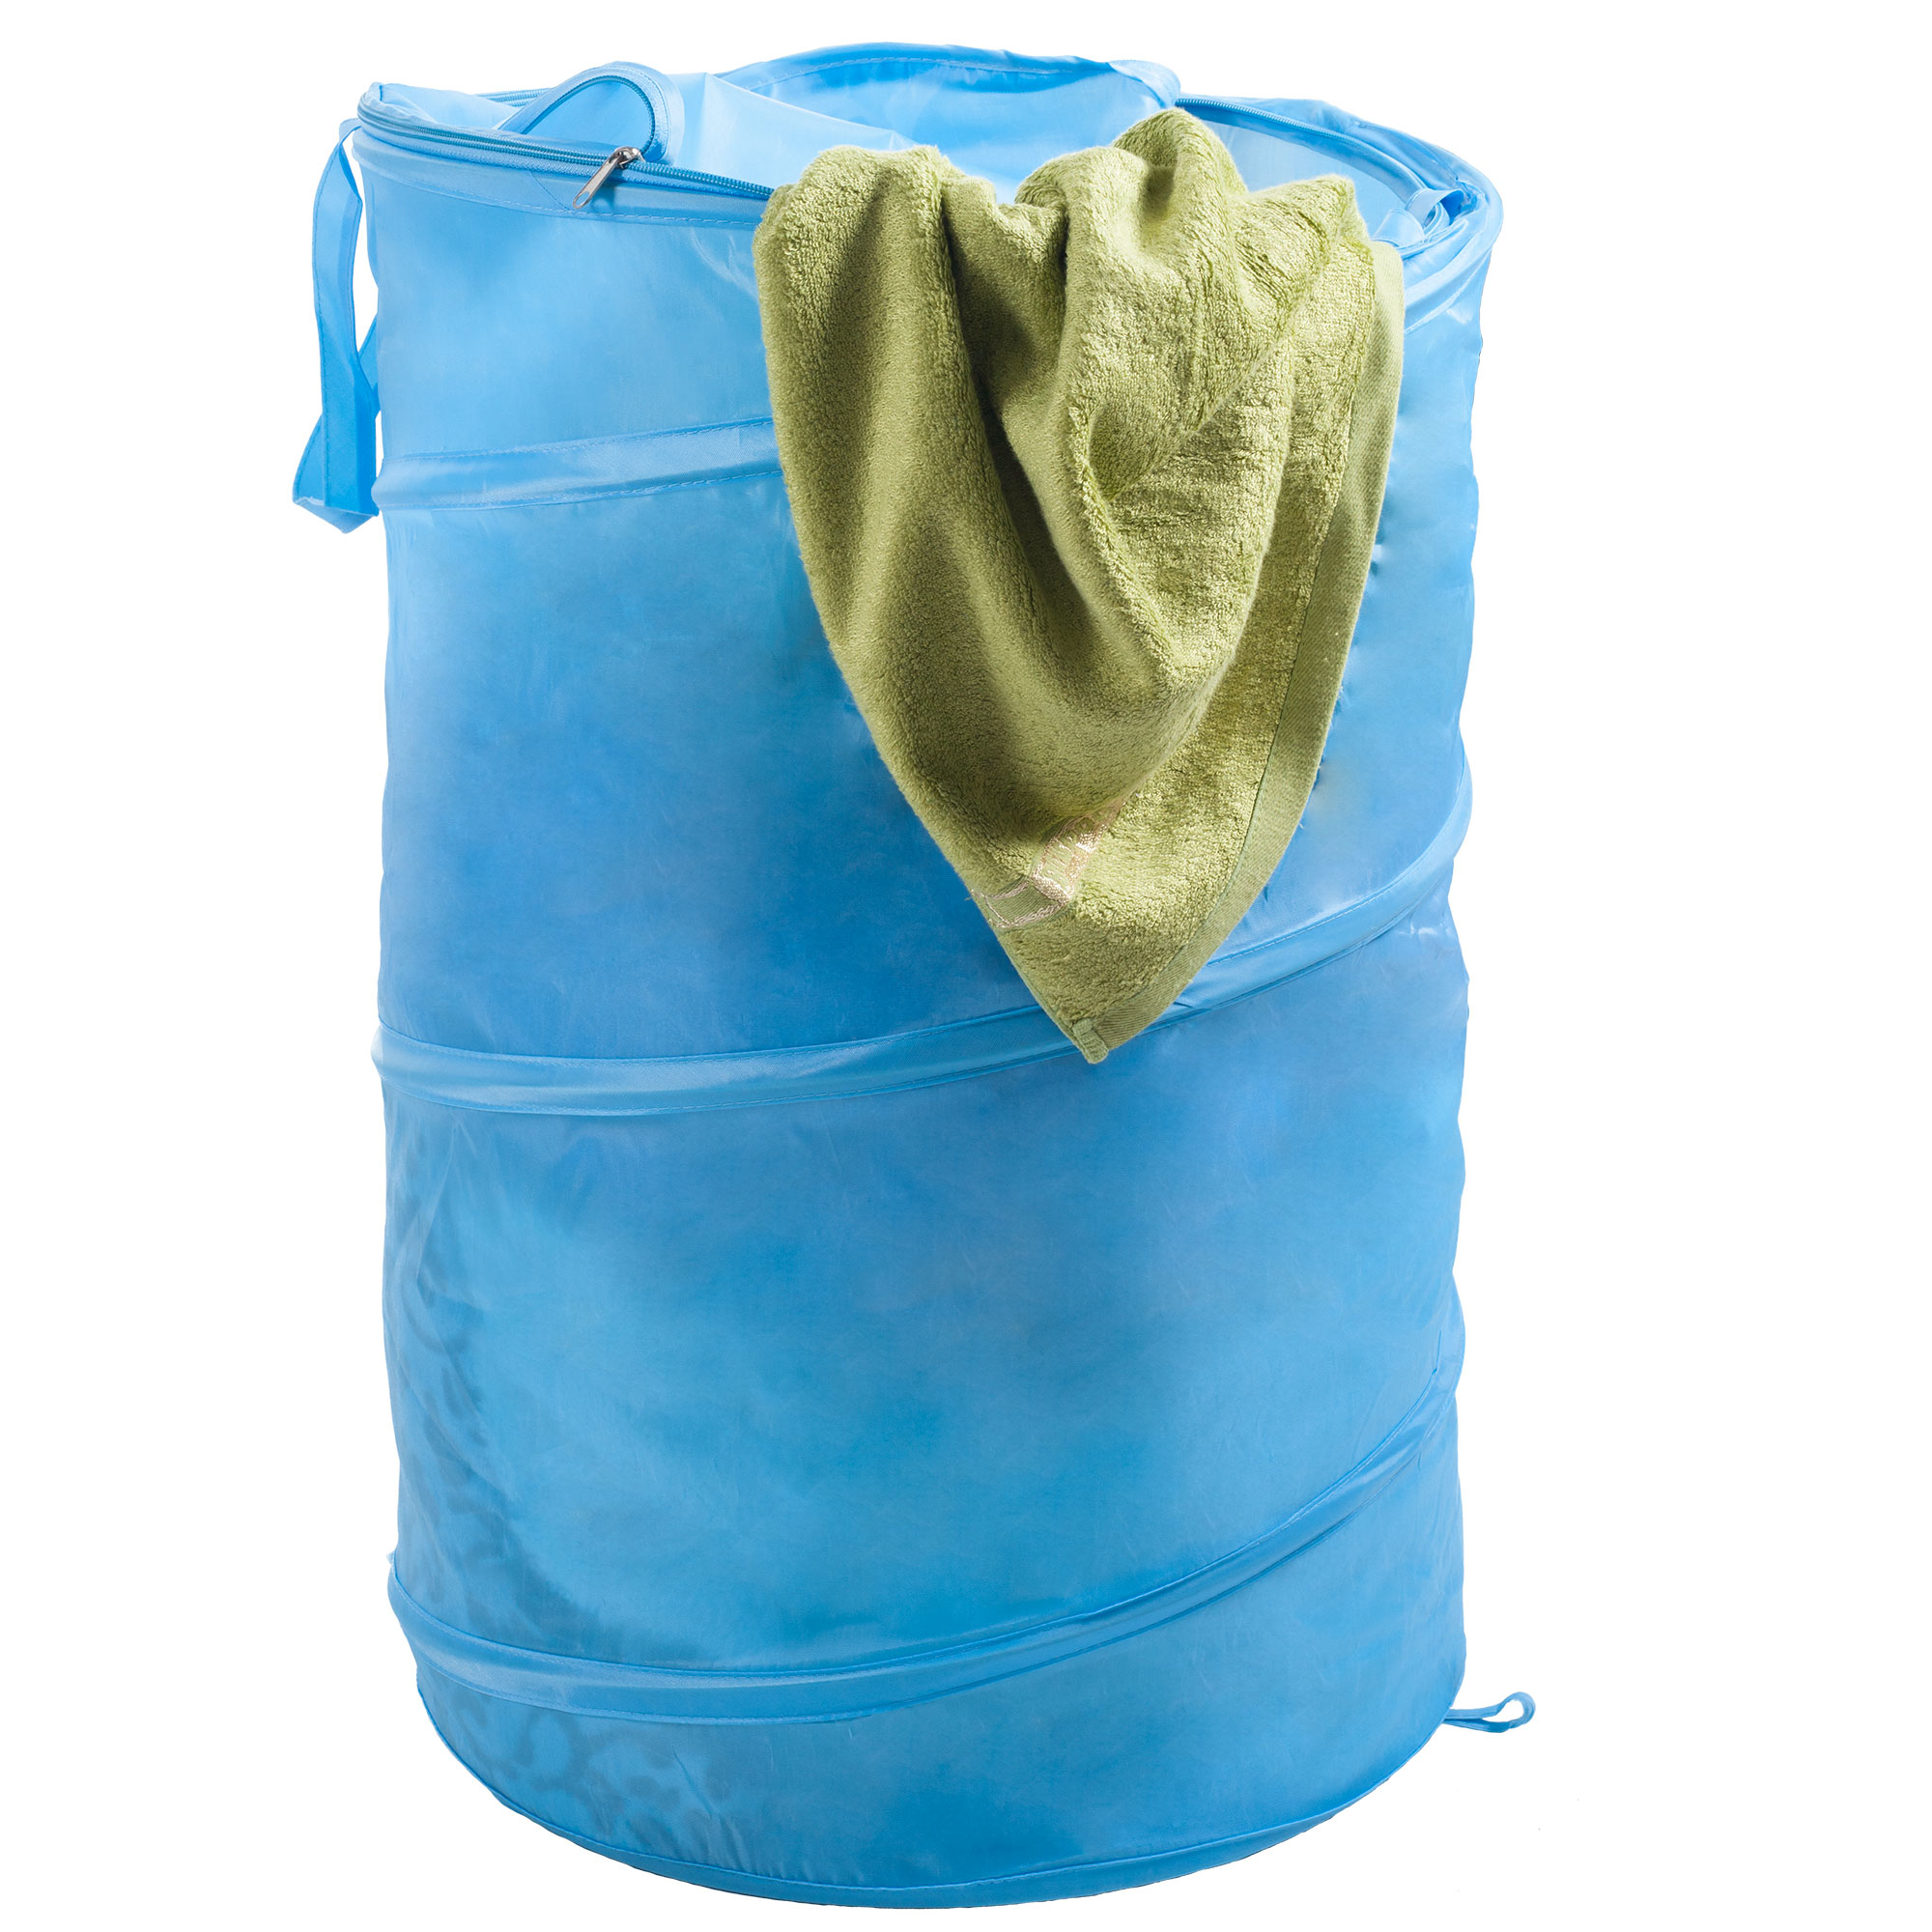 Lavish Home Breathable Pop Up Laundry Clothes Hamper - Light Blue